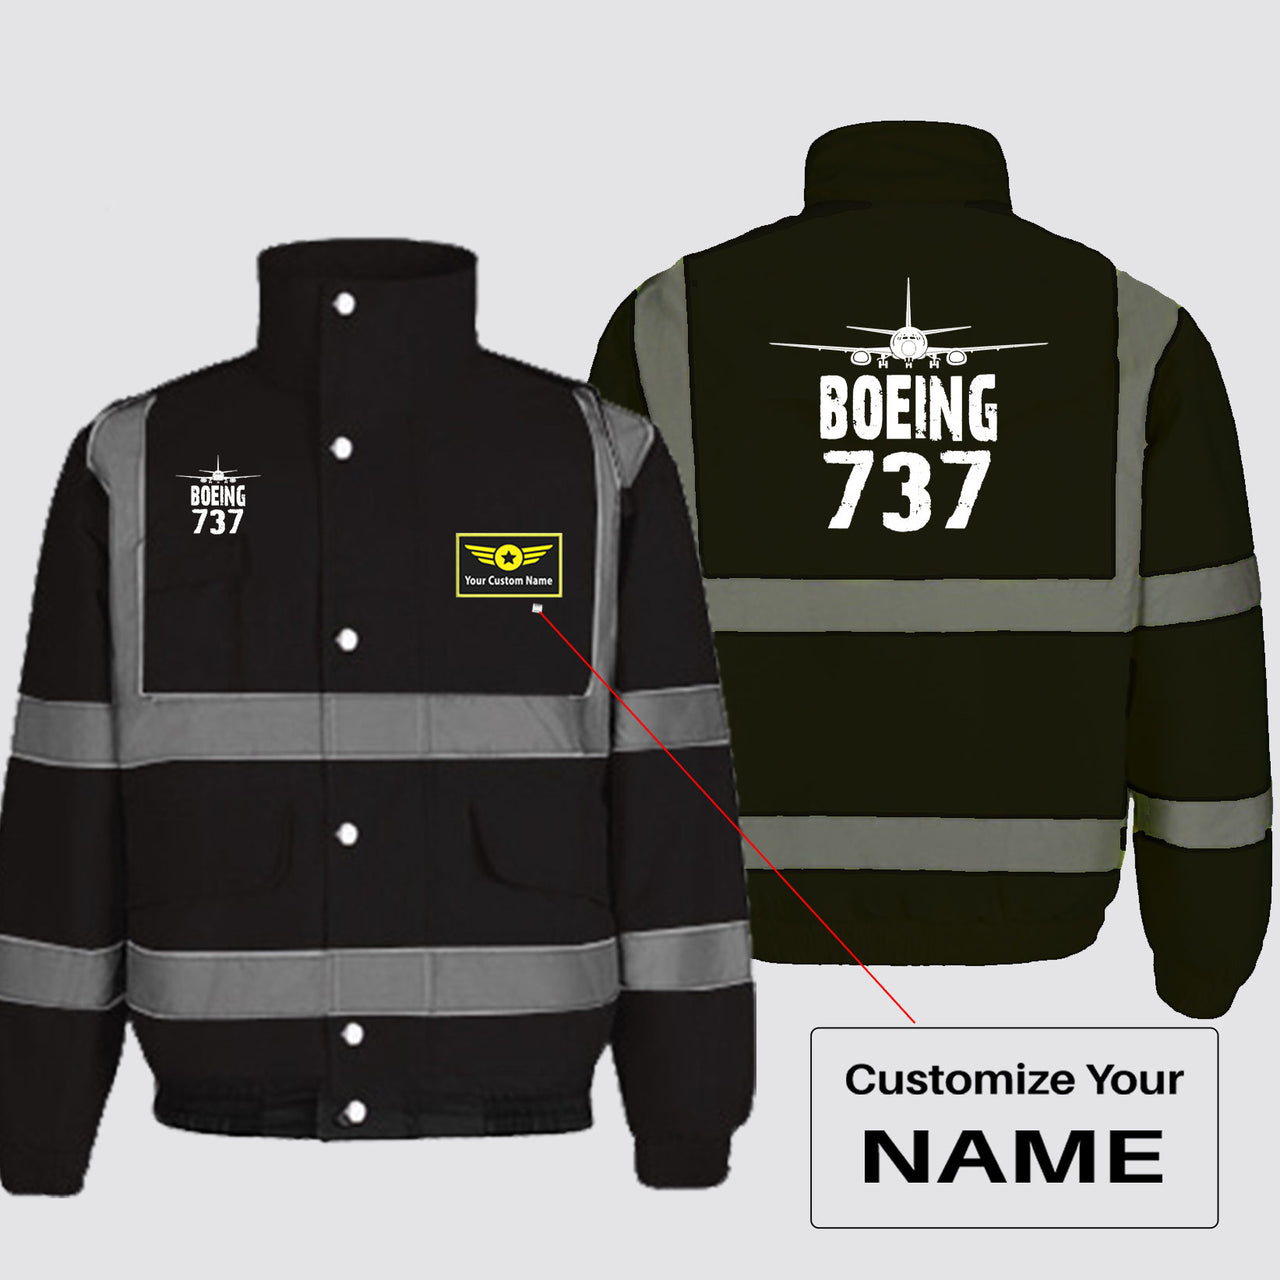 Boeing 737 & Plane Designed Reflective Winter Jackets